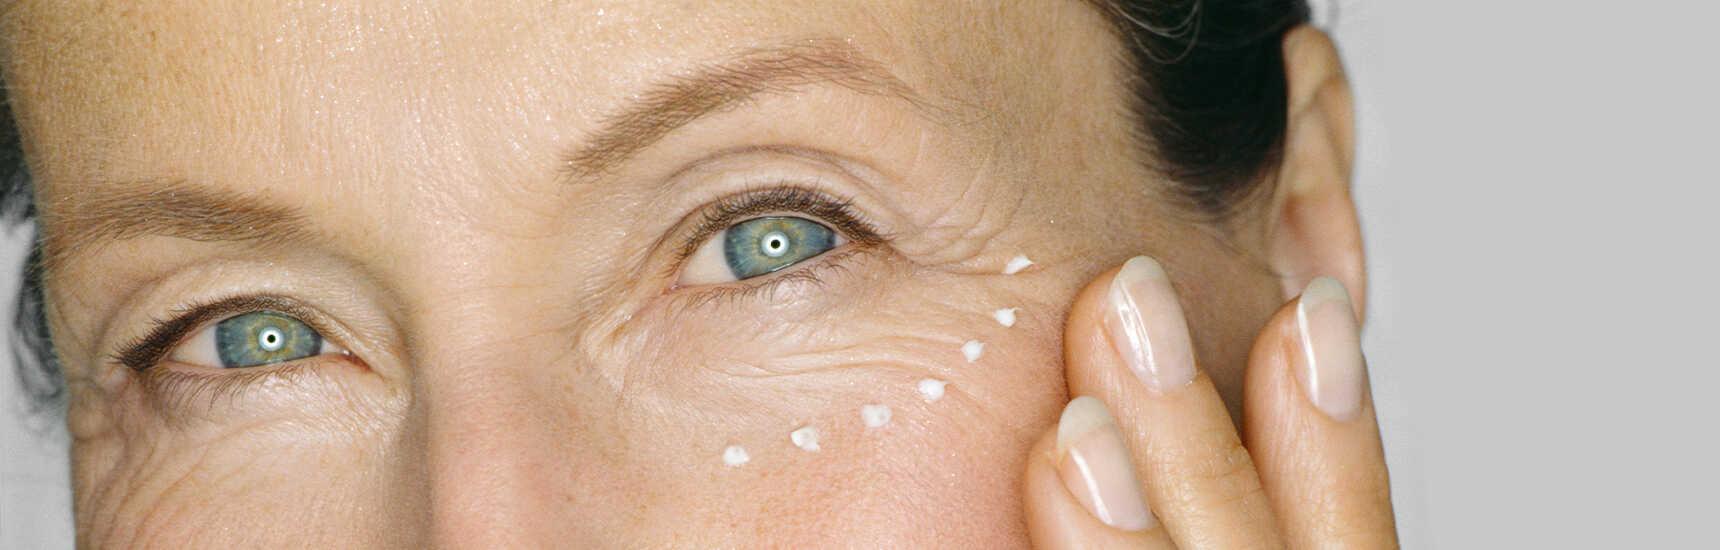 What Does Eye Cream Do? Learn 6 Eye Cream Benefits